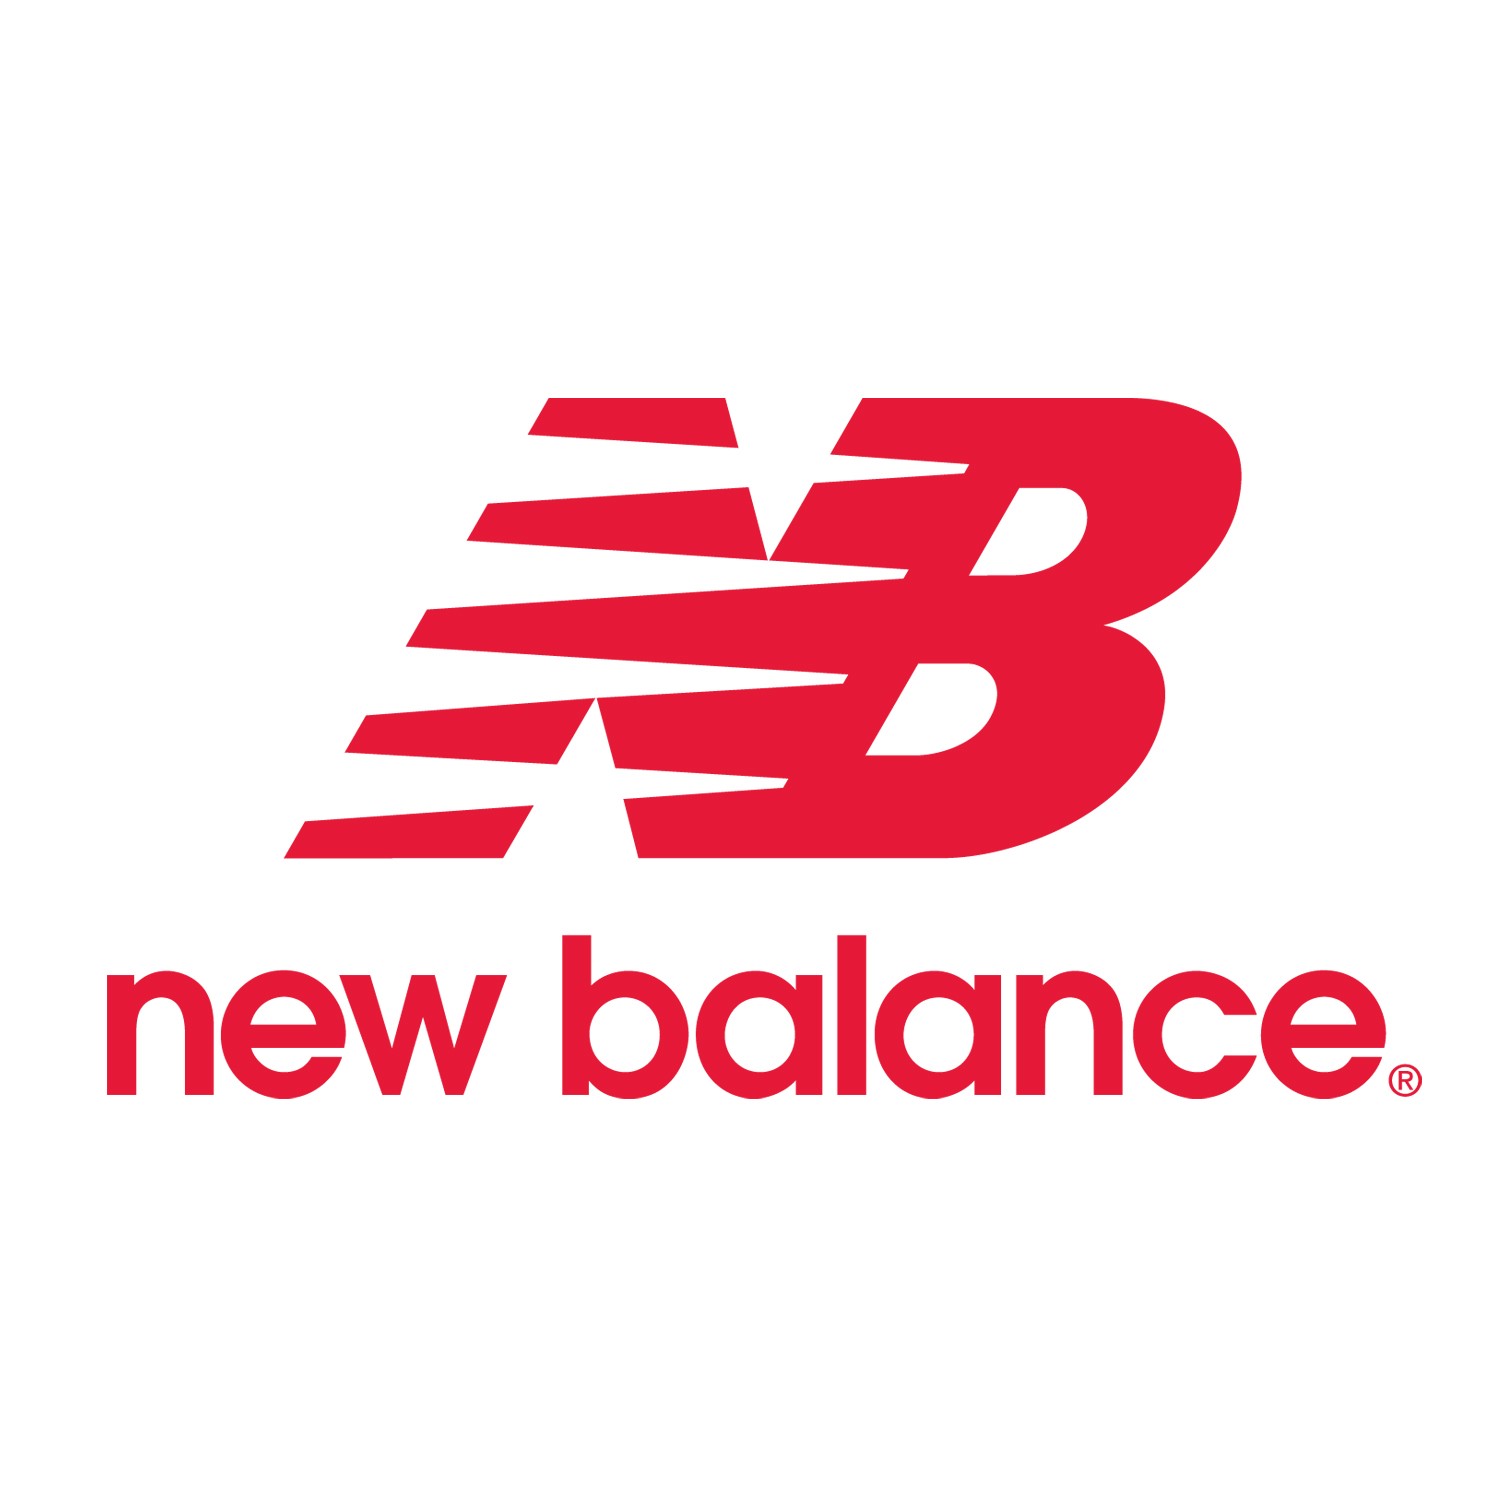  New Balance Australia promo code